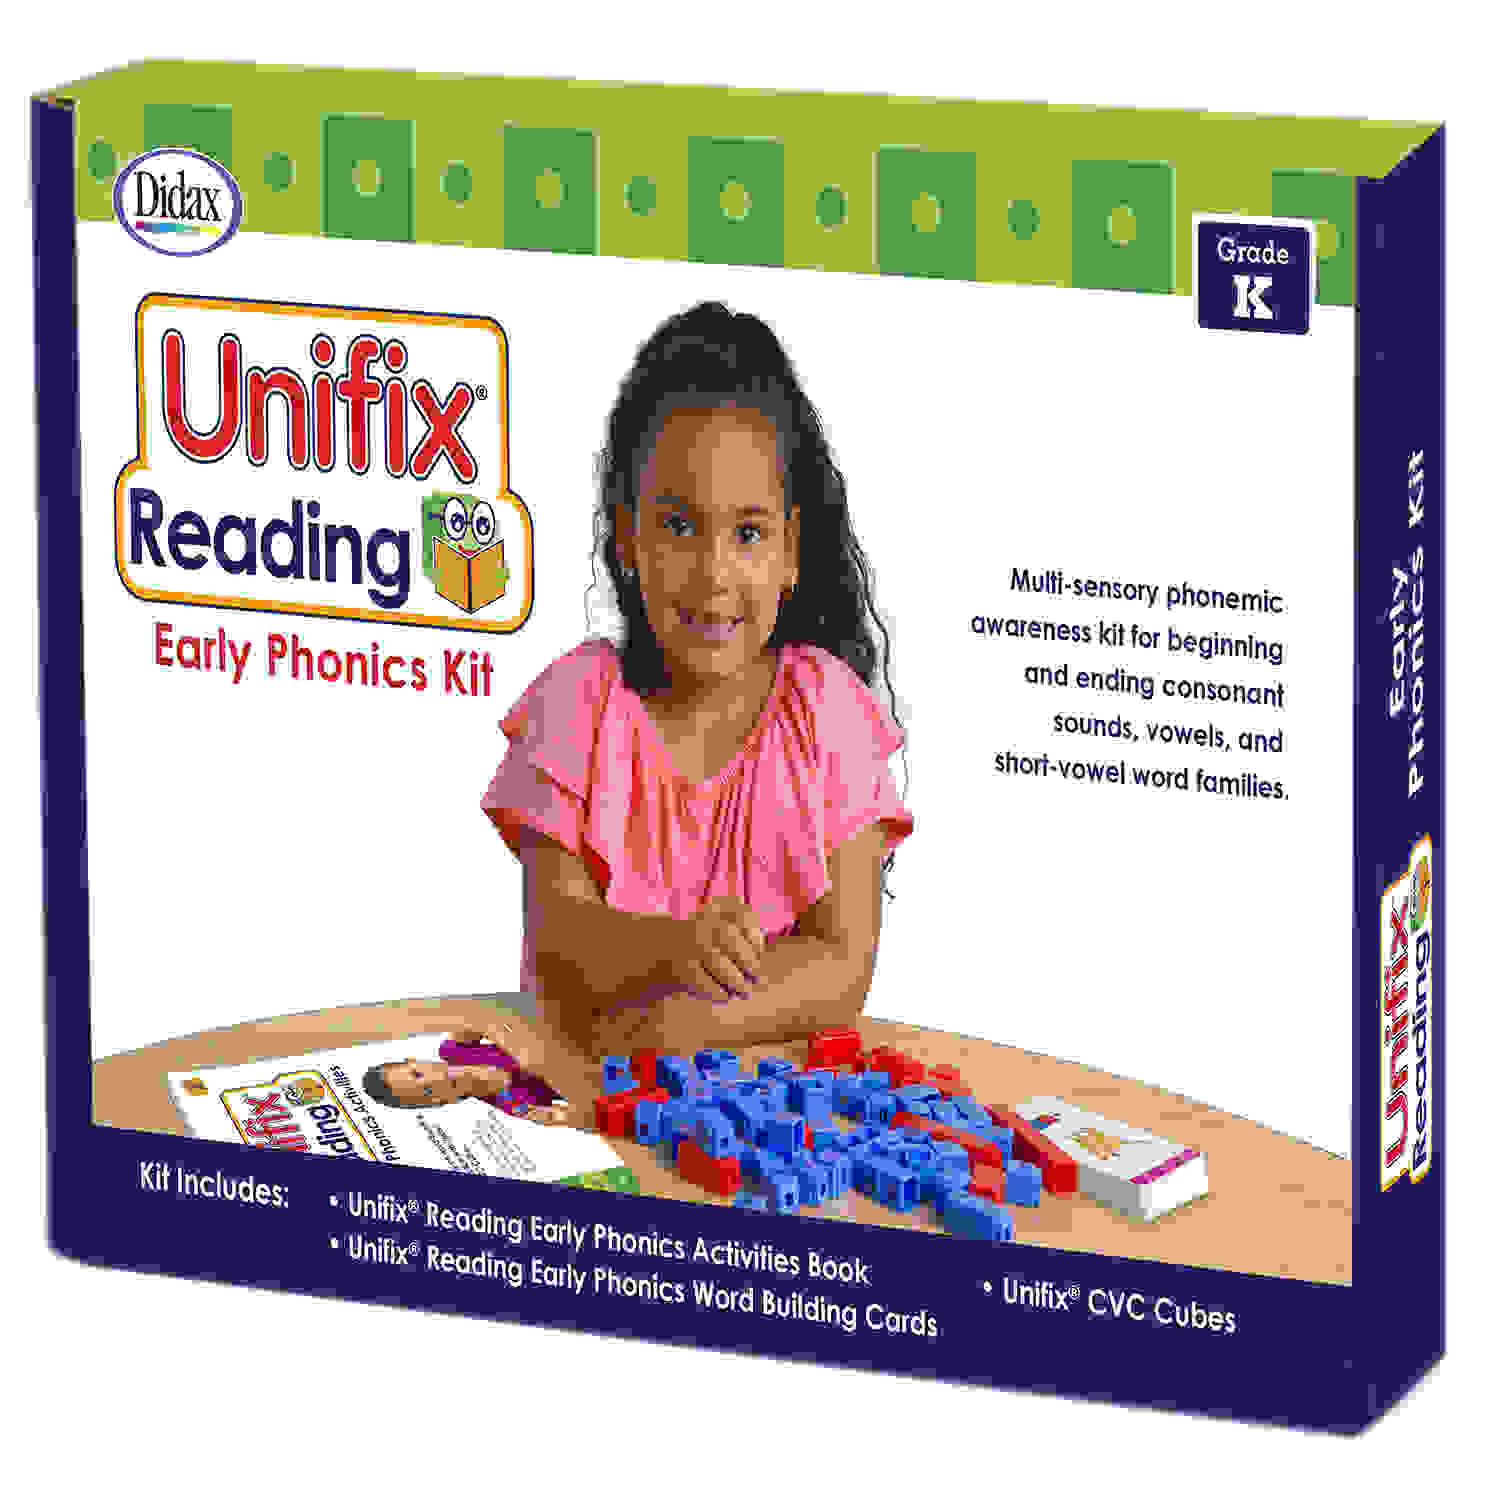 Unifix Reading Early Phonics Kit